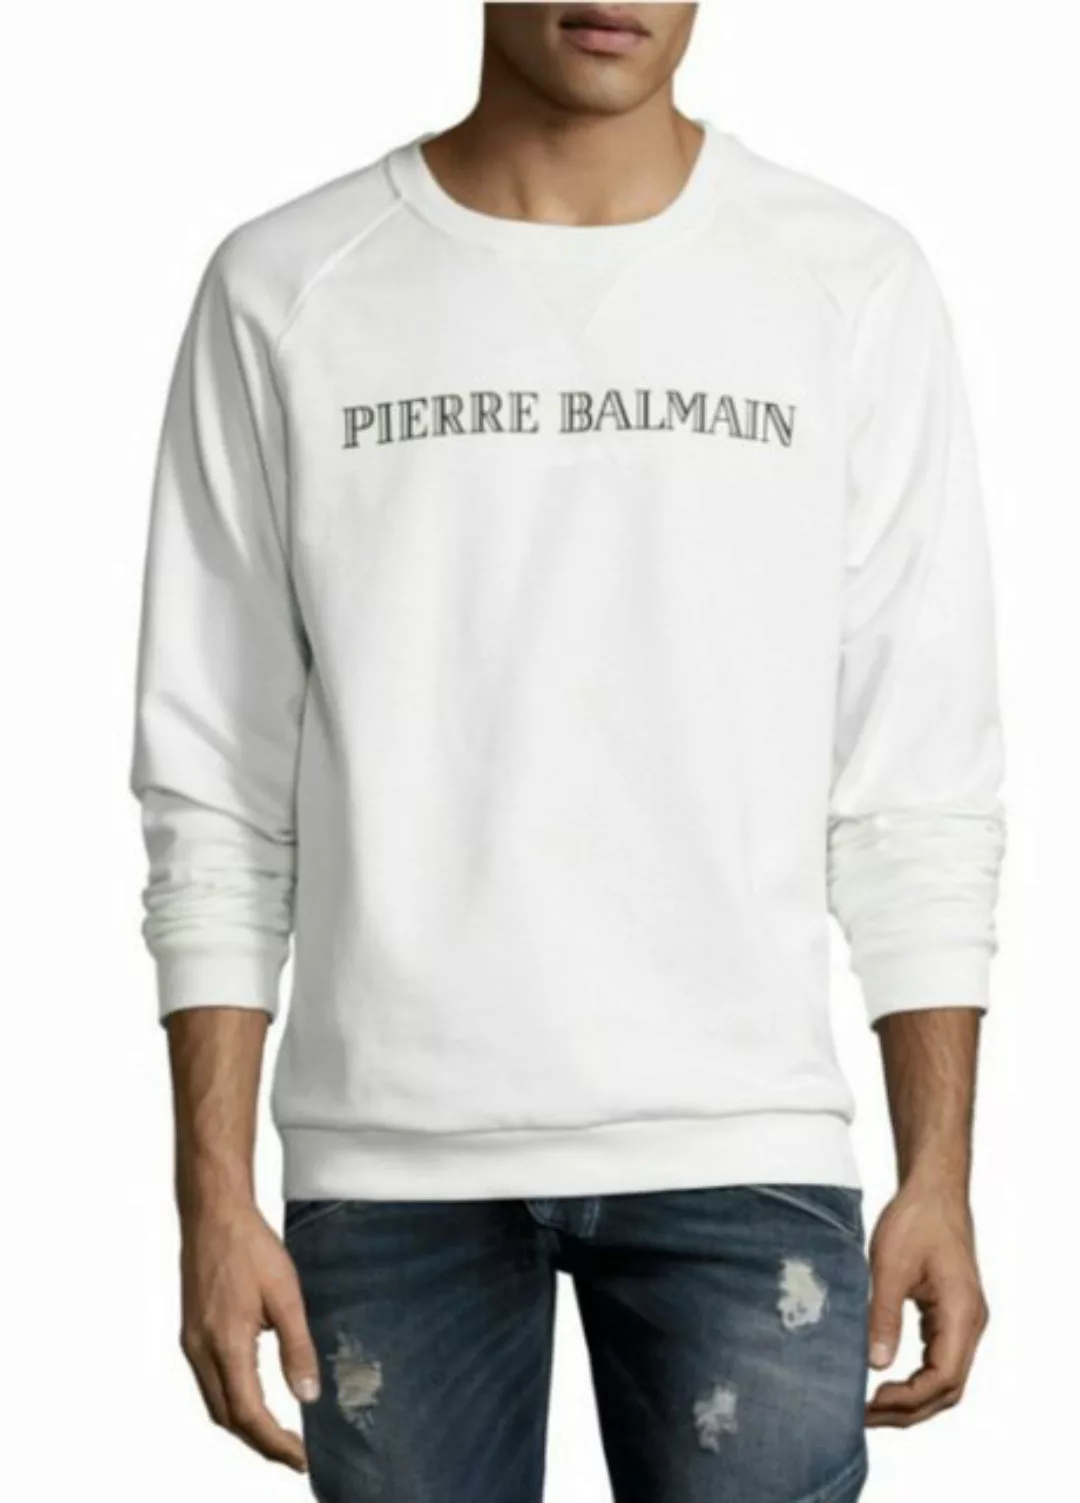 Balmain Paris Sweatshirt Pierre Balmain Sweatshirt Logo Sweater Jumper Pull günstig online kaufen